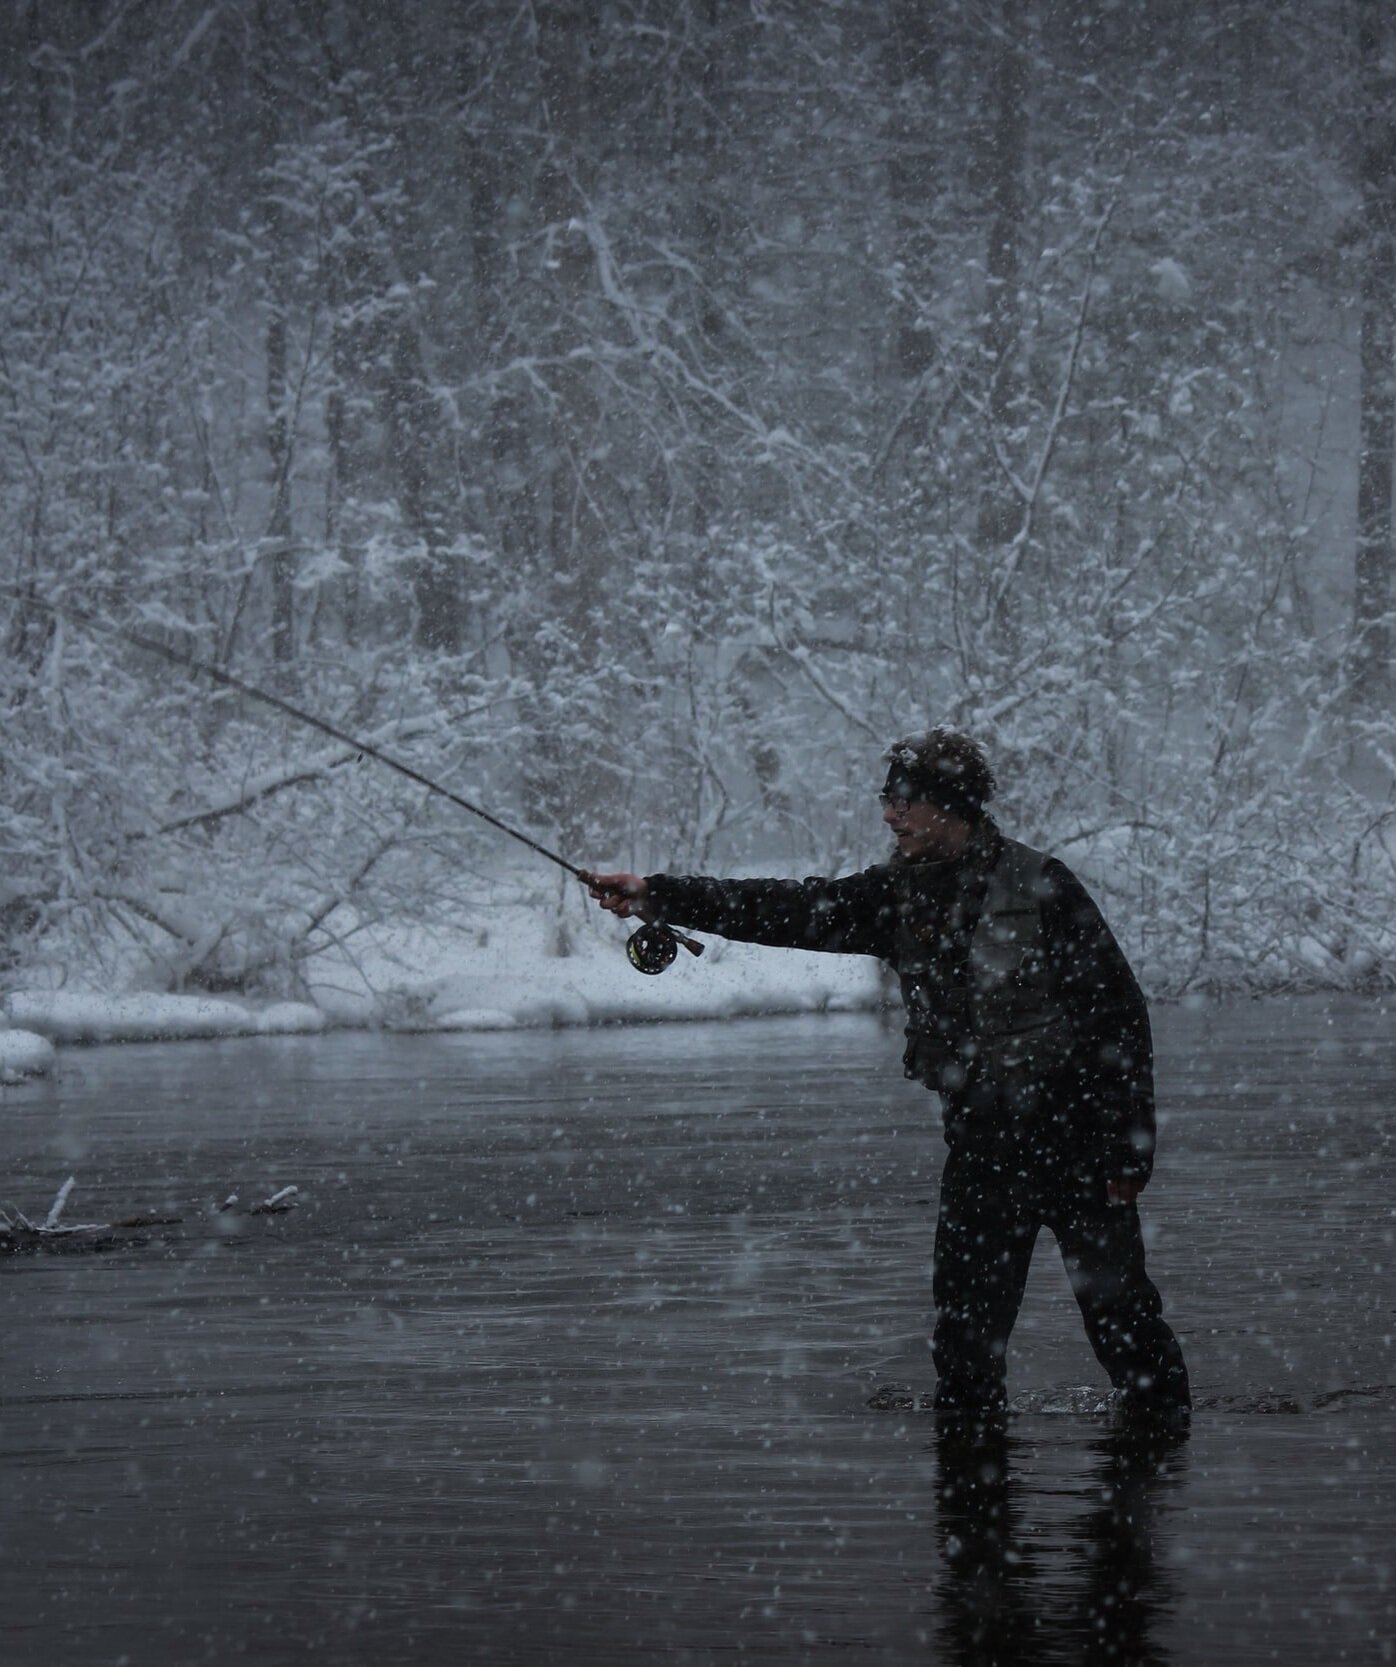 Ice Fishing — State Games of Michigan